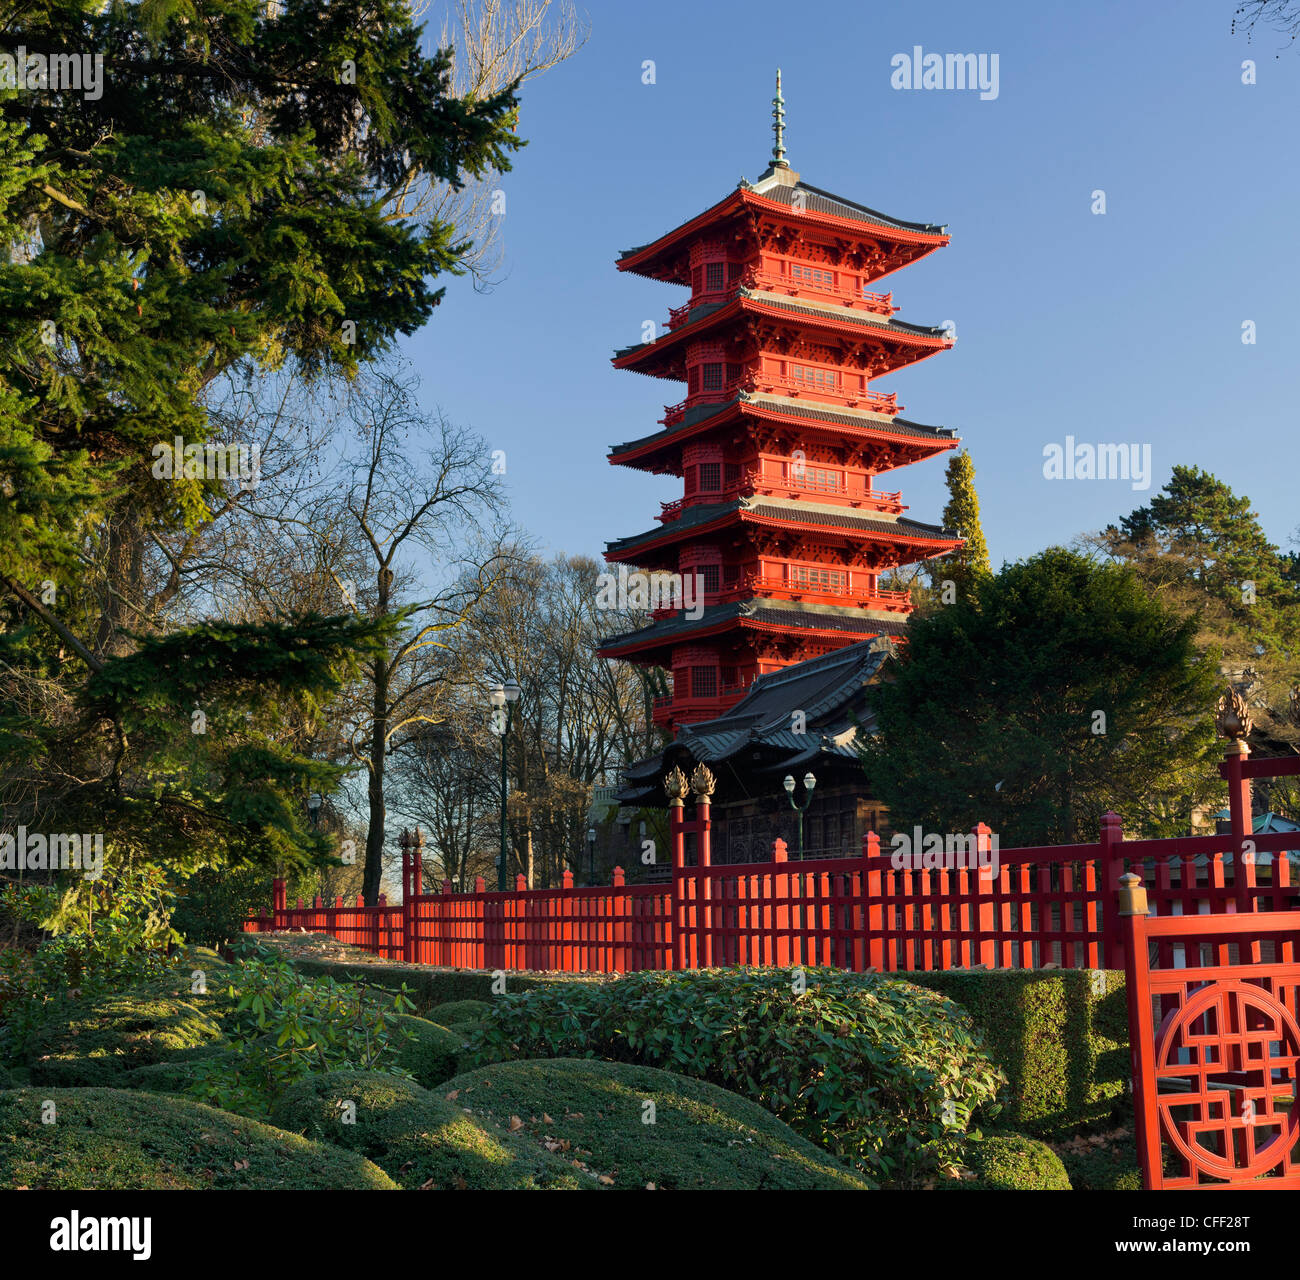 Tour Japonaise, torre giapponese nella luce del sole, Bruxelles, Belgio, Europa Foto Stock